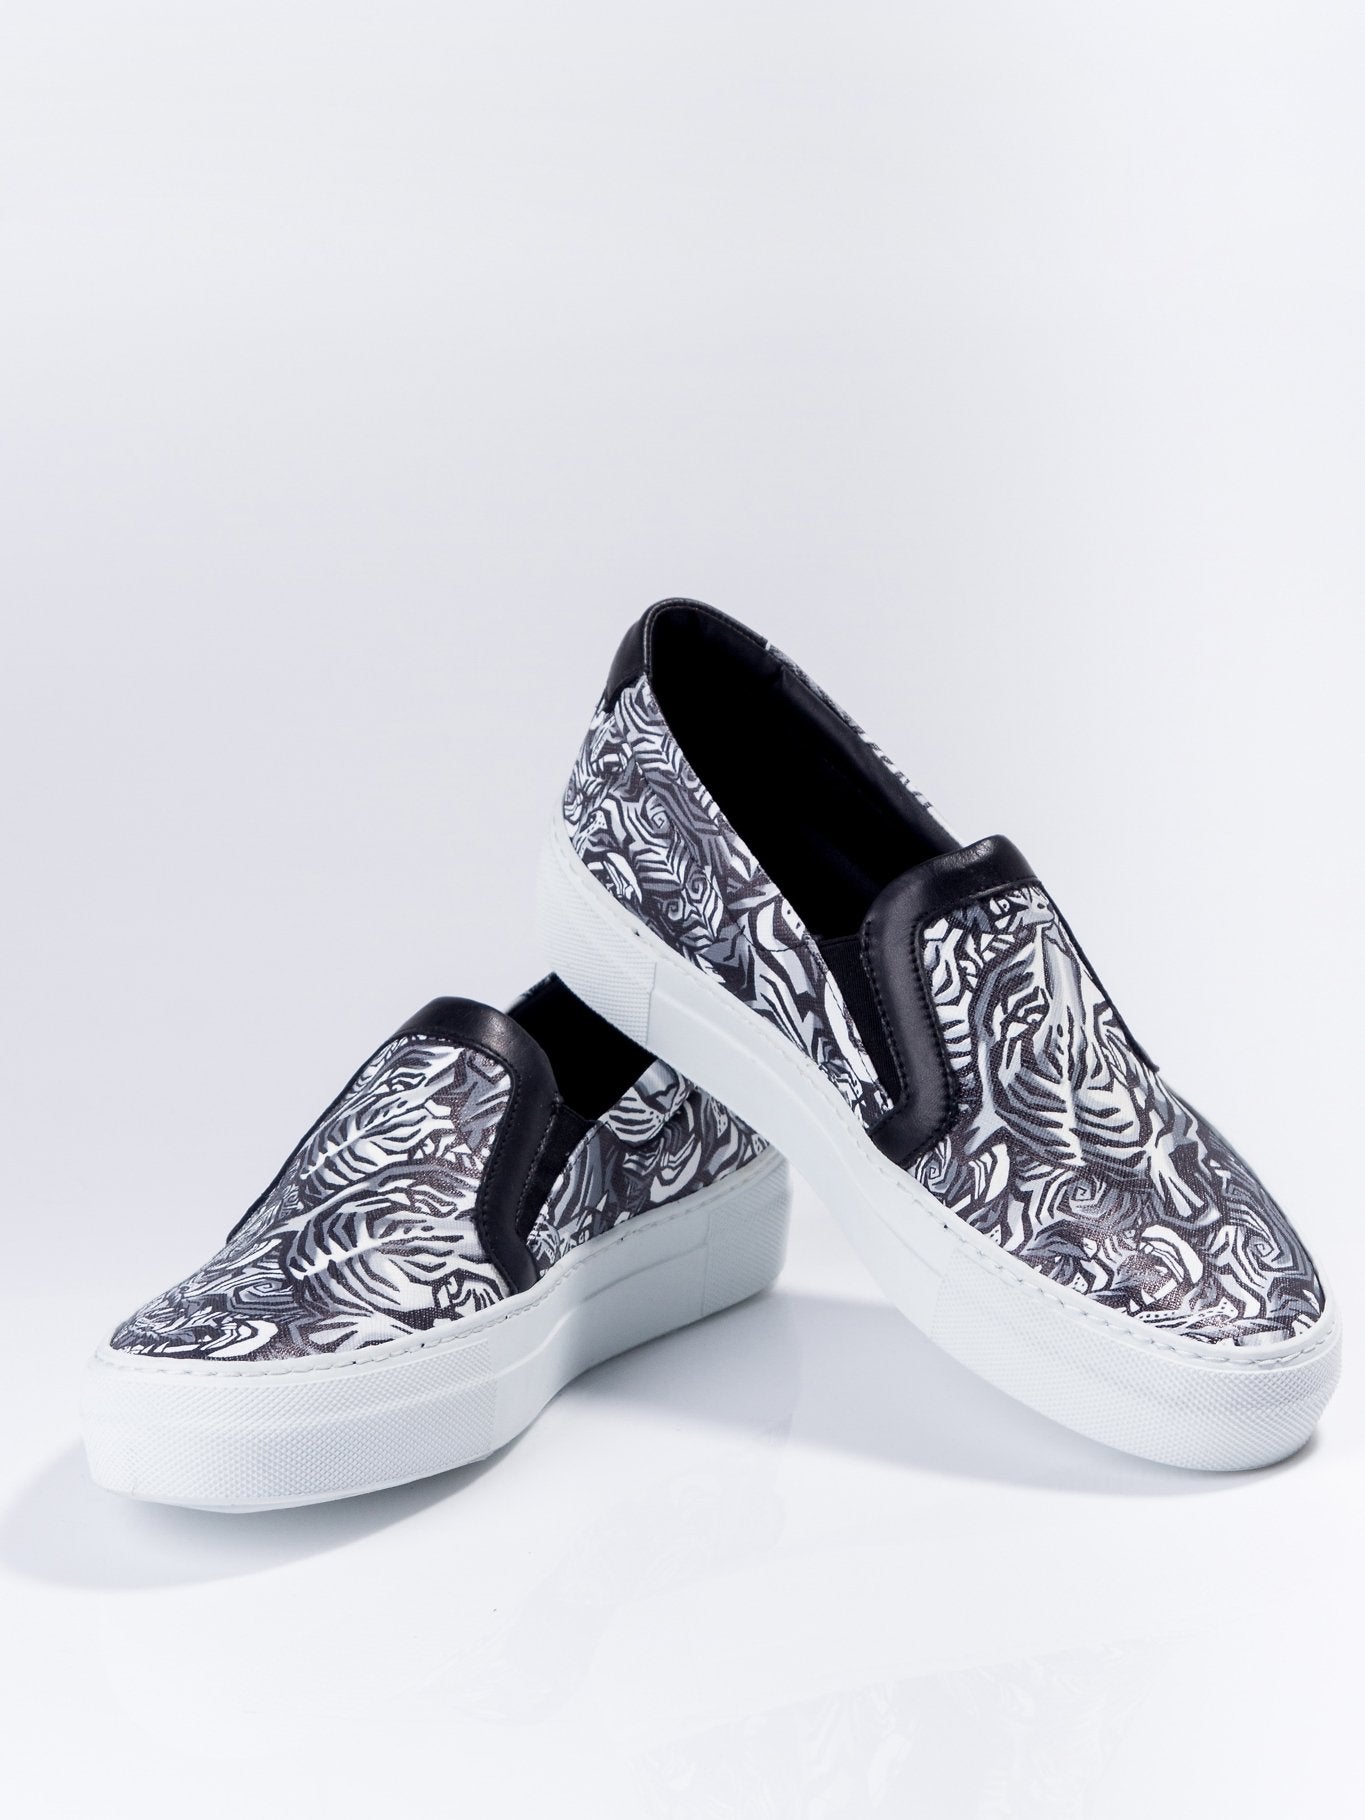 Dolce Vita | Shoes | Dolce Vita Tiger Leopard Print Sneakers | Poshmark